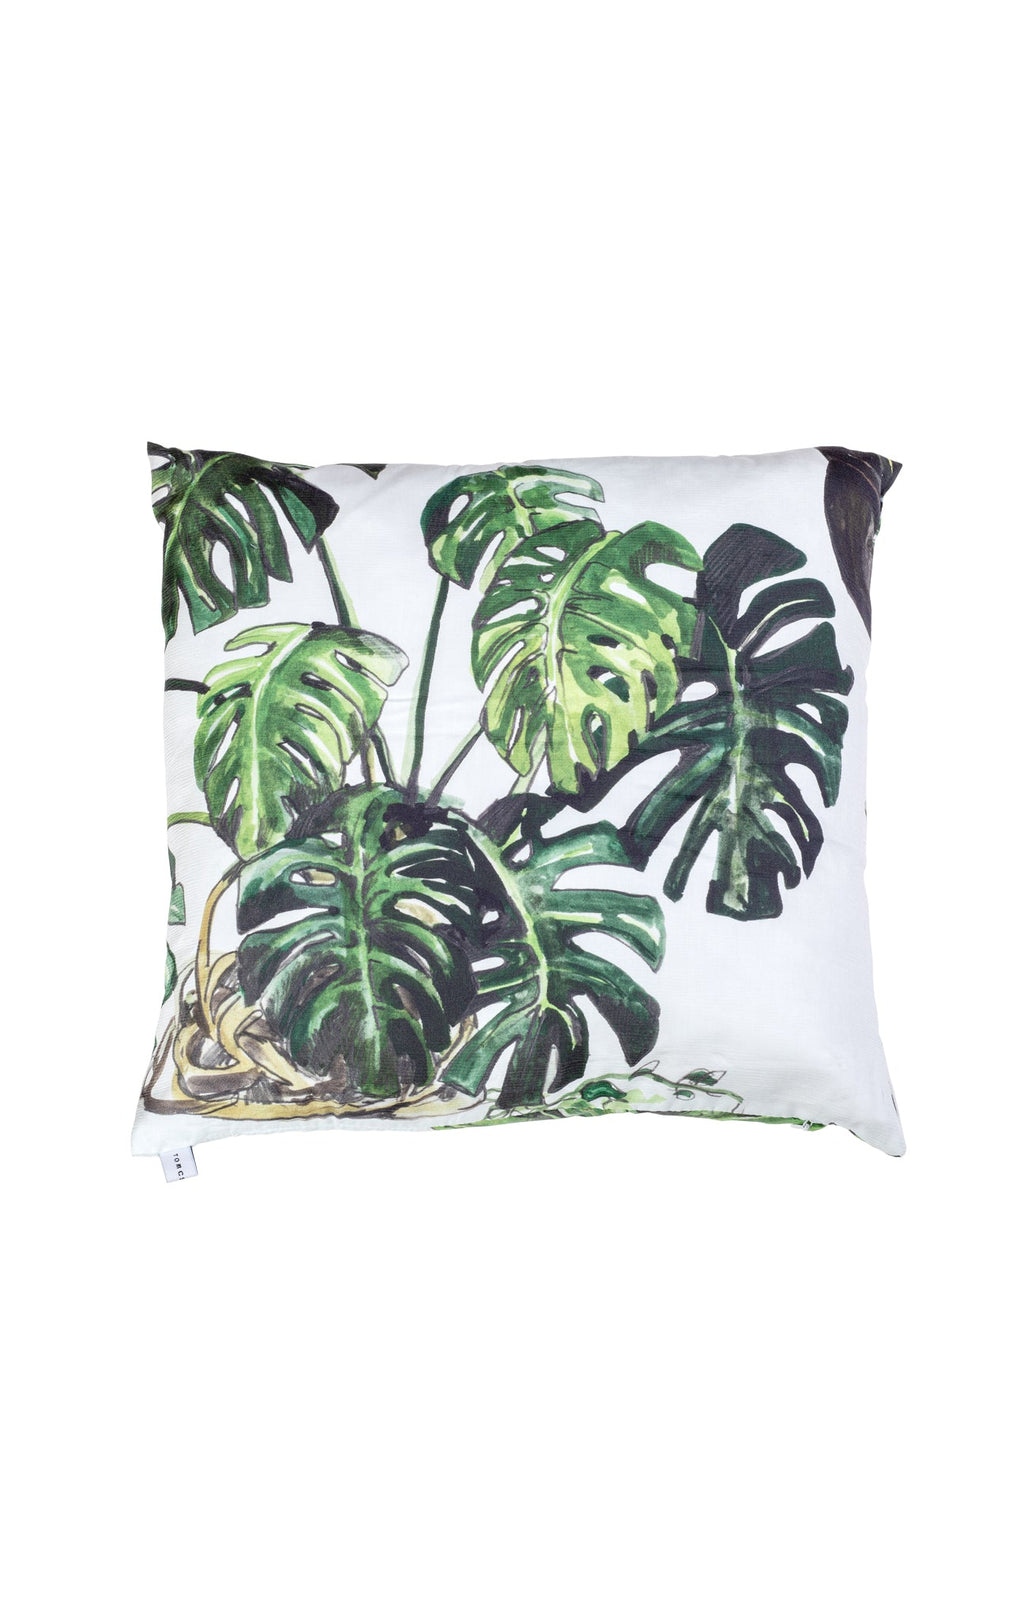 FREE GIFT Decorative cushion 'plants' print